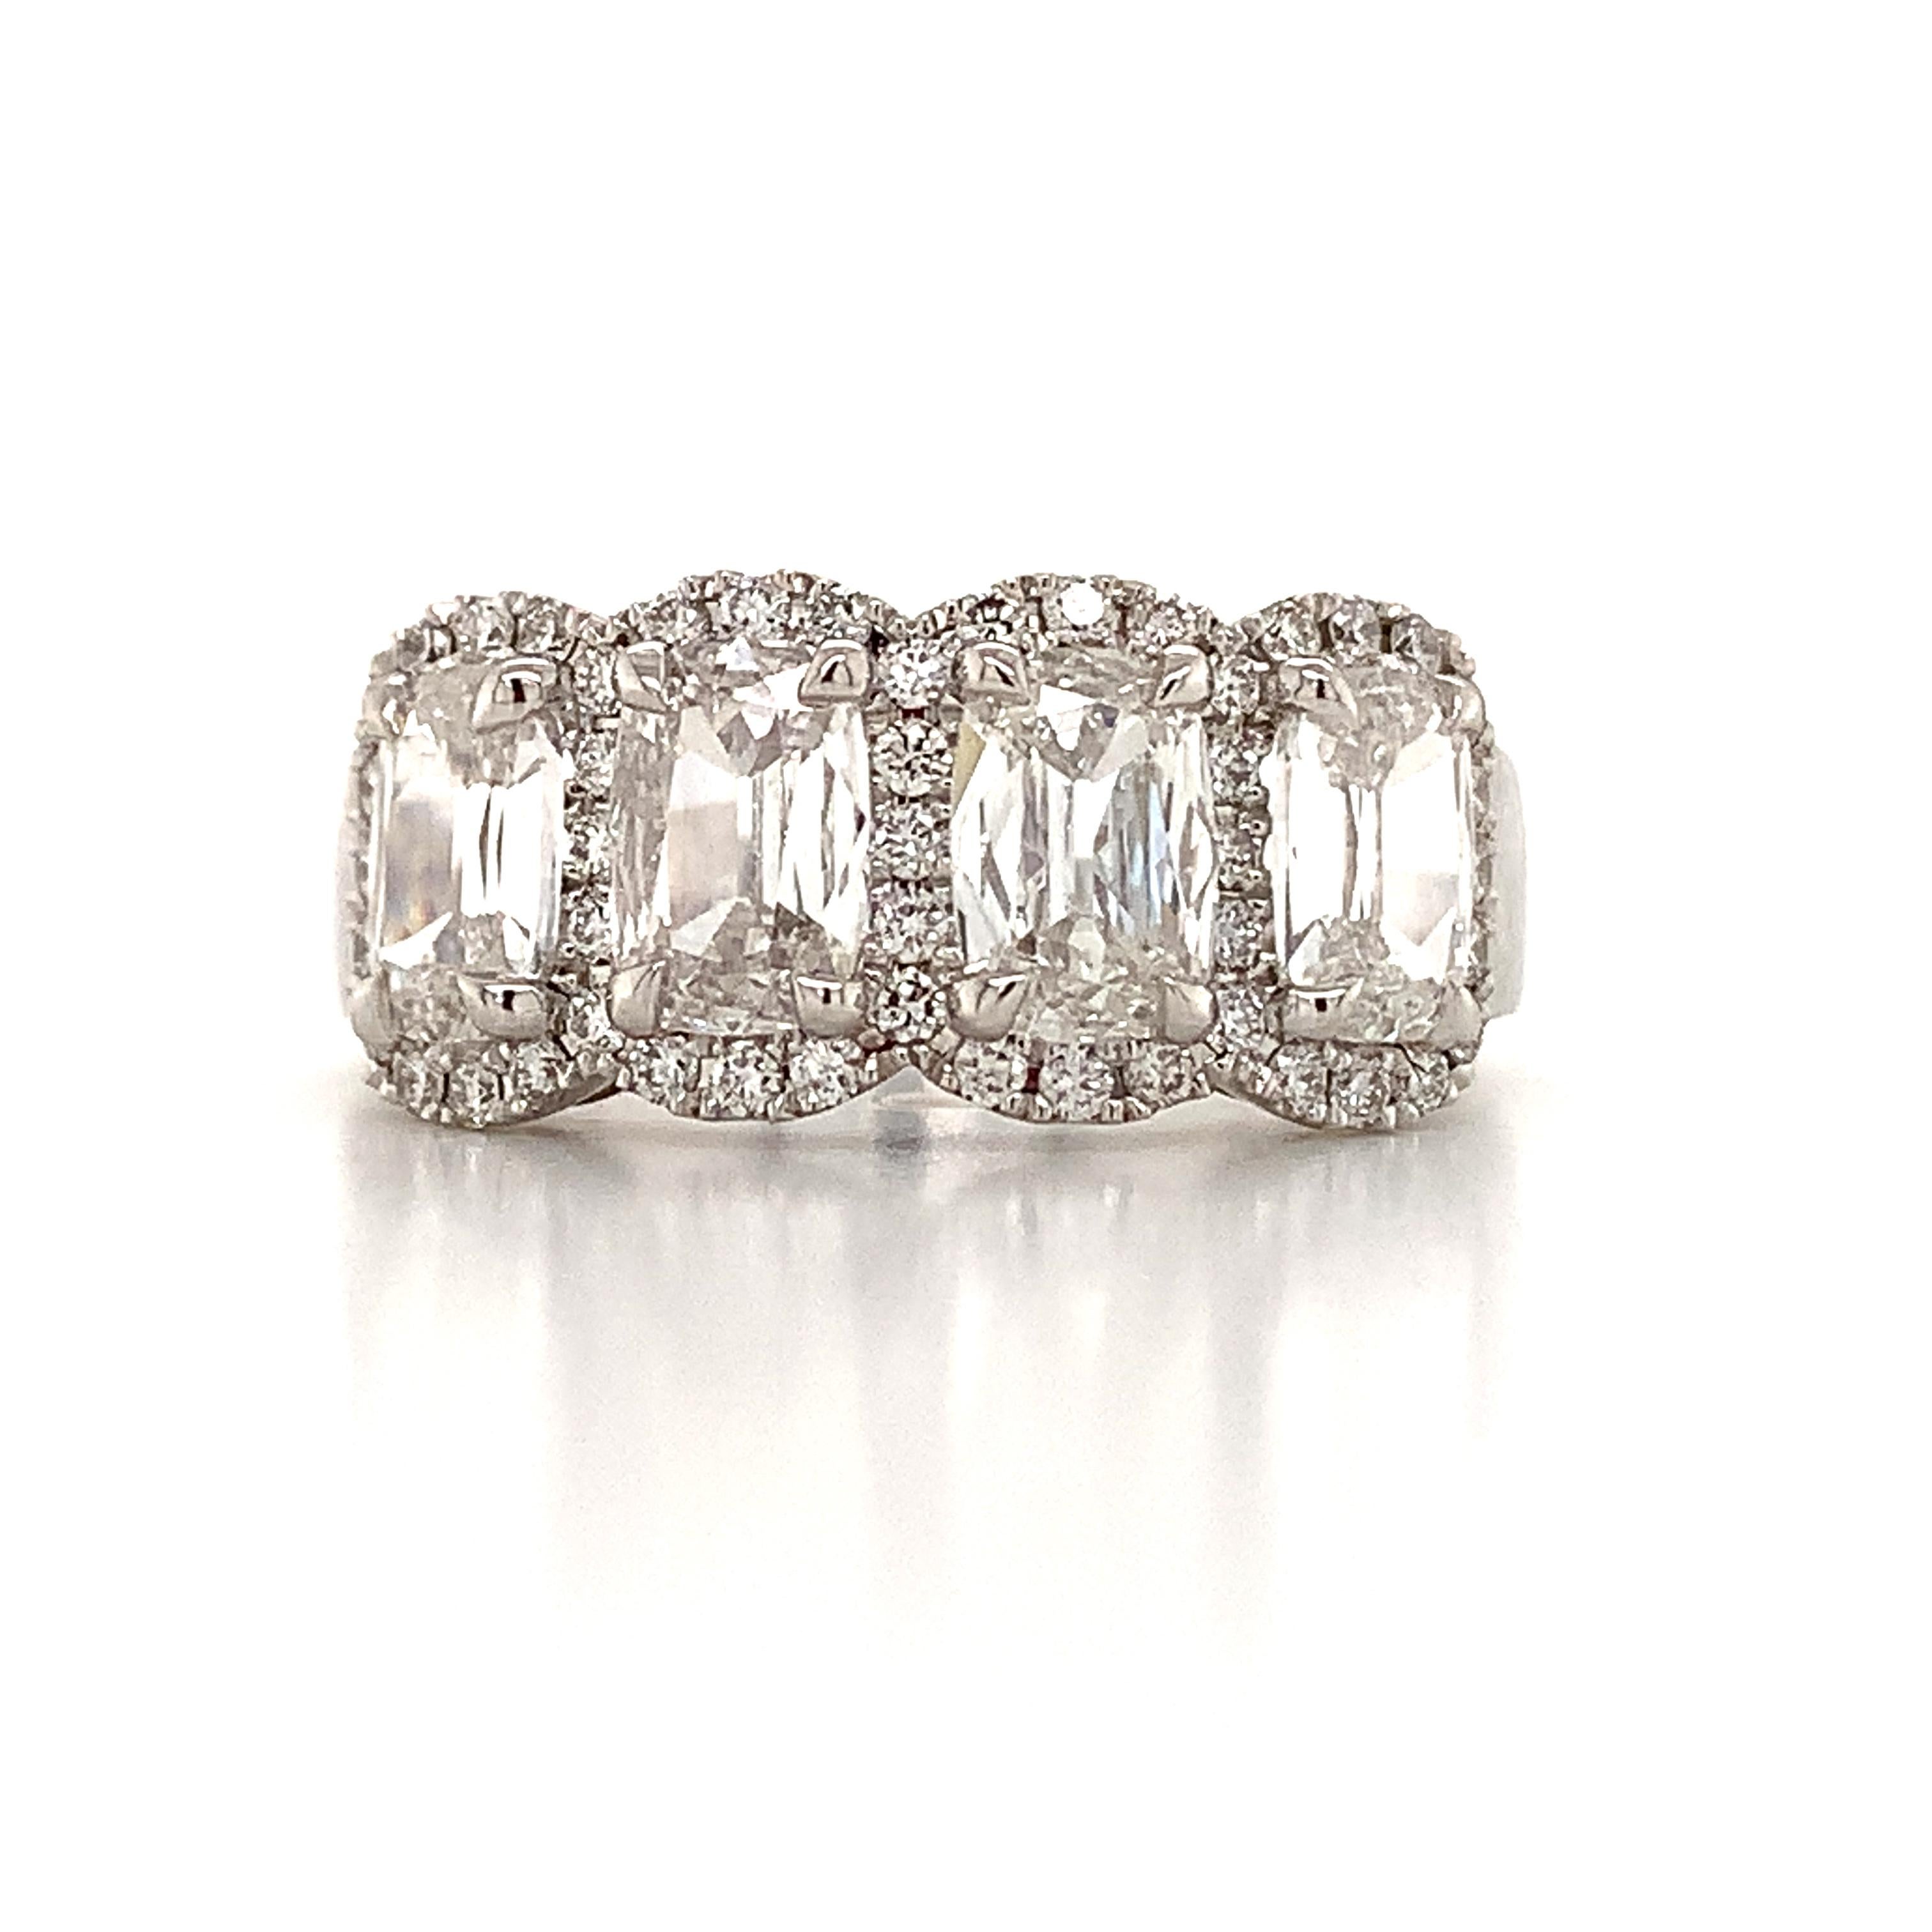 Four Stone Diamond Anniversary Ring.
Metal: 18K White Gold
Diamond: 4 Cushion Cut
Carat Weight: 2.46ctw
Color & Quality: G - VS1
Certification: Henri Daussi
Pave: 49 Diamonds 0.36cts
SKU: 126243